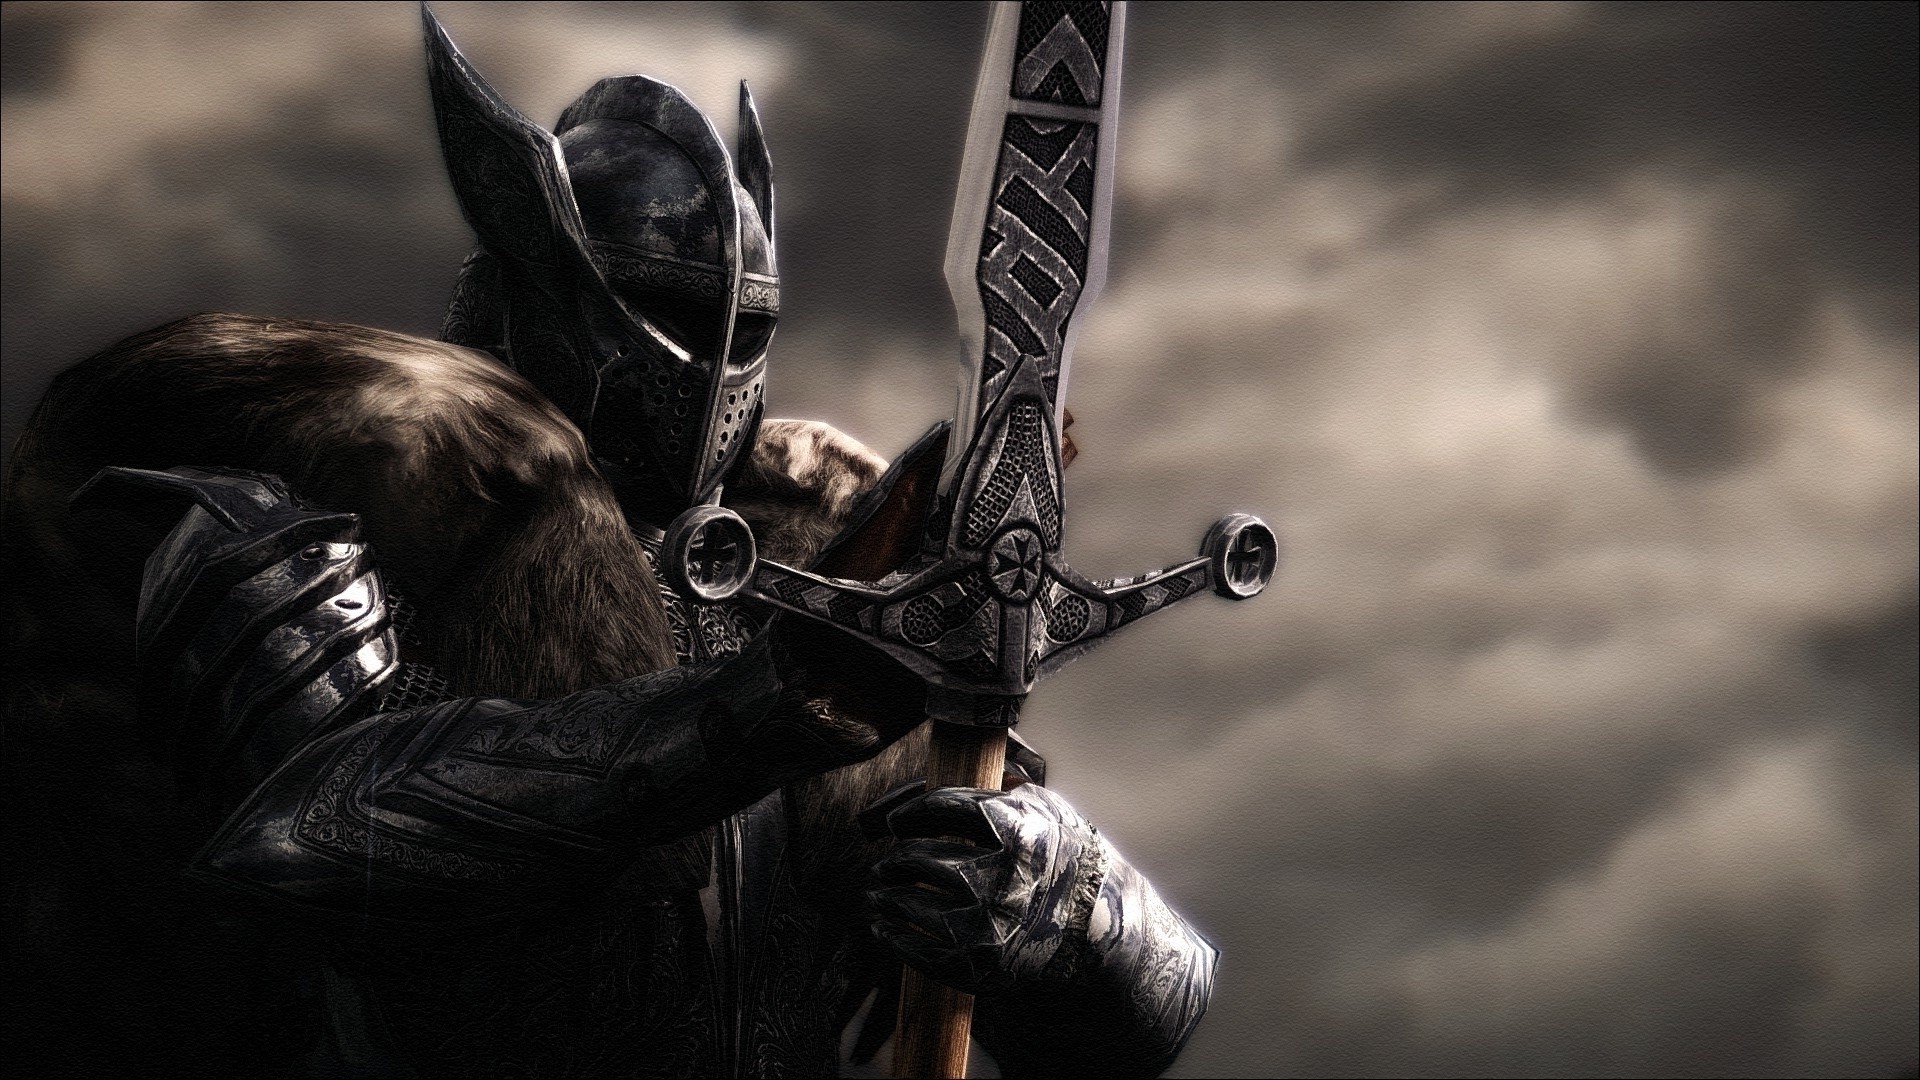 Knight Knights Warrior Armor Sword Helmet The Elder Scrolls V Skyrim Wallpapers Hd Desktop And Mobile Backgrounds